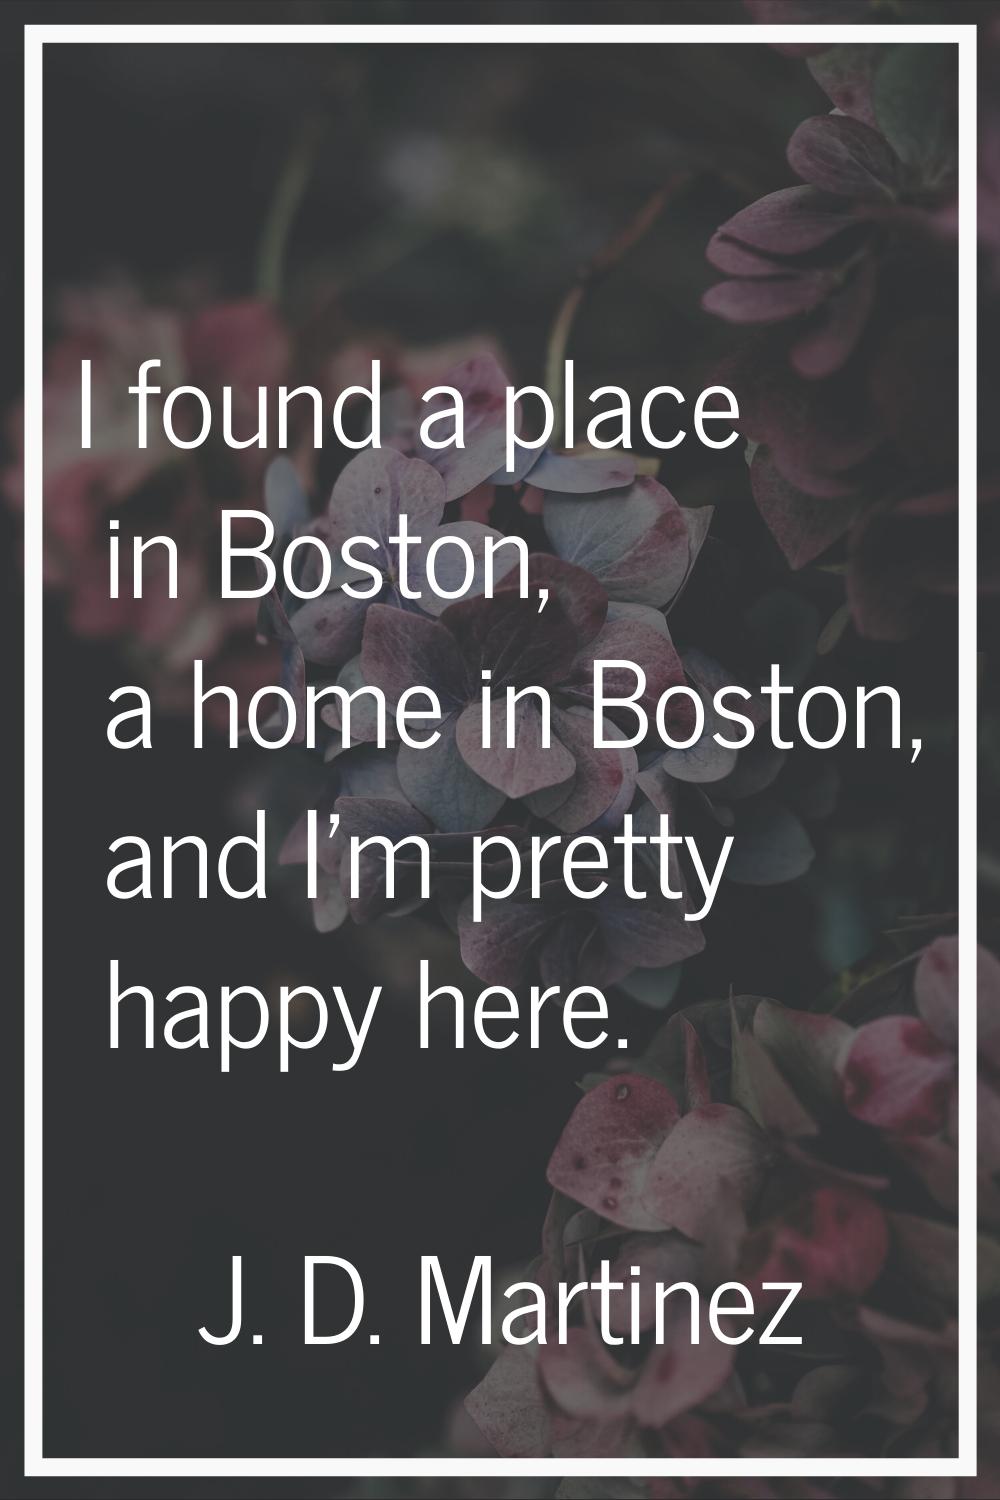 I found a place in Boston, a home in Boston, and I'm pretty happy here.